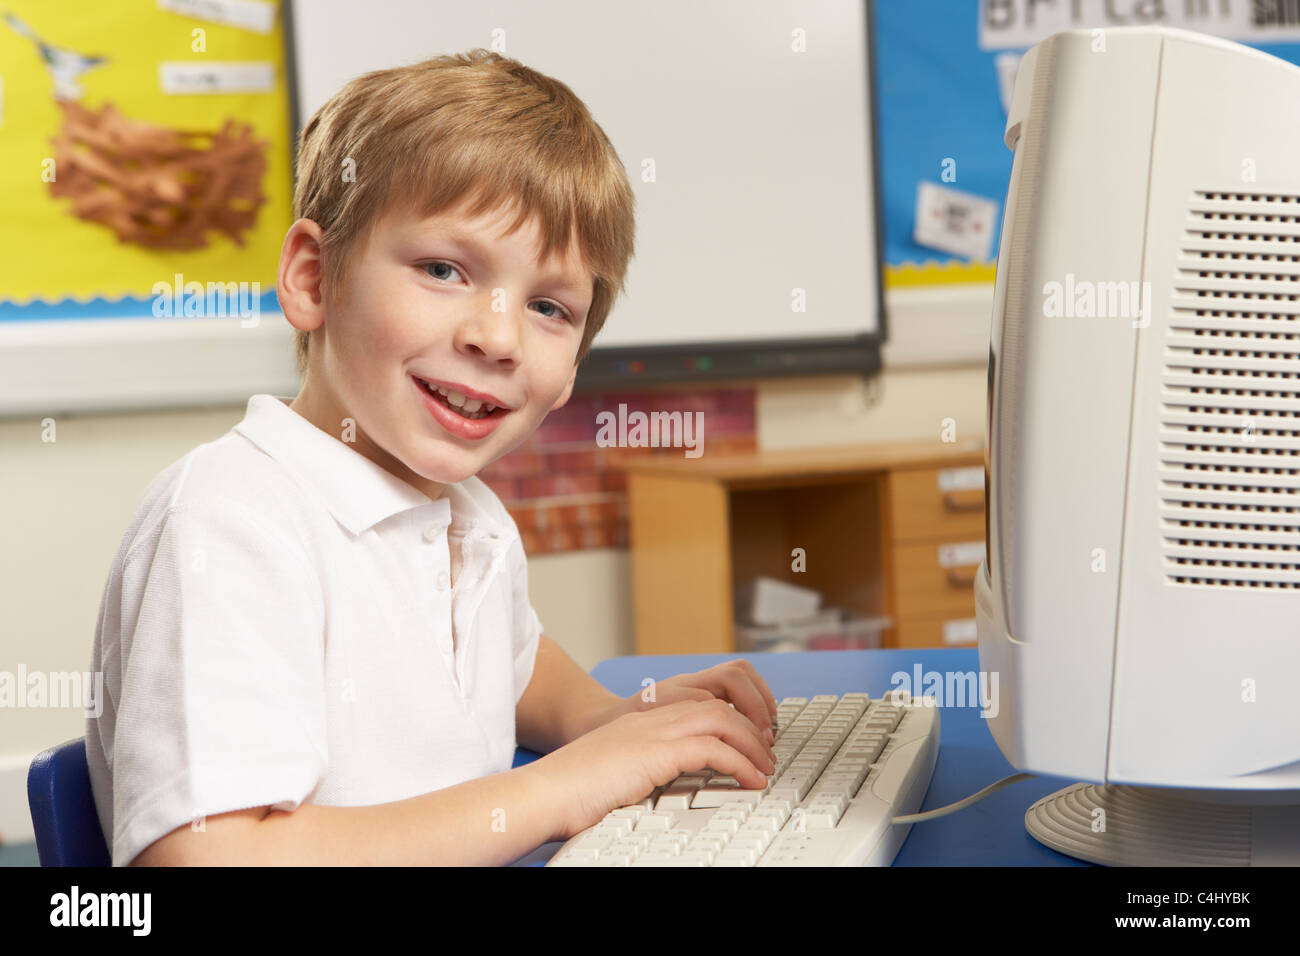 Schuljunge In IT-Klasse mit Computer Stockfoto